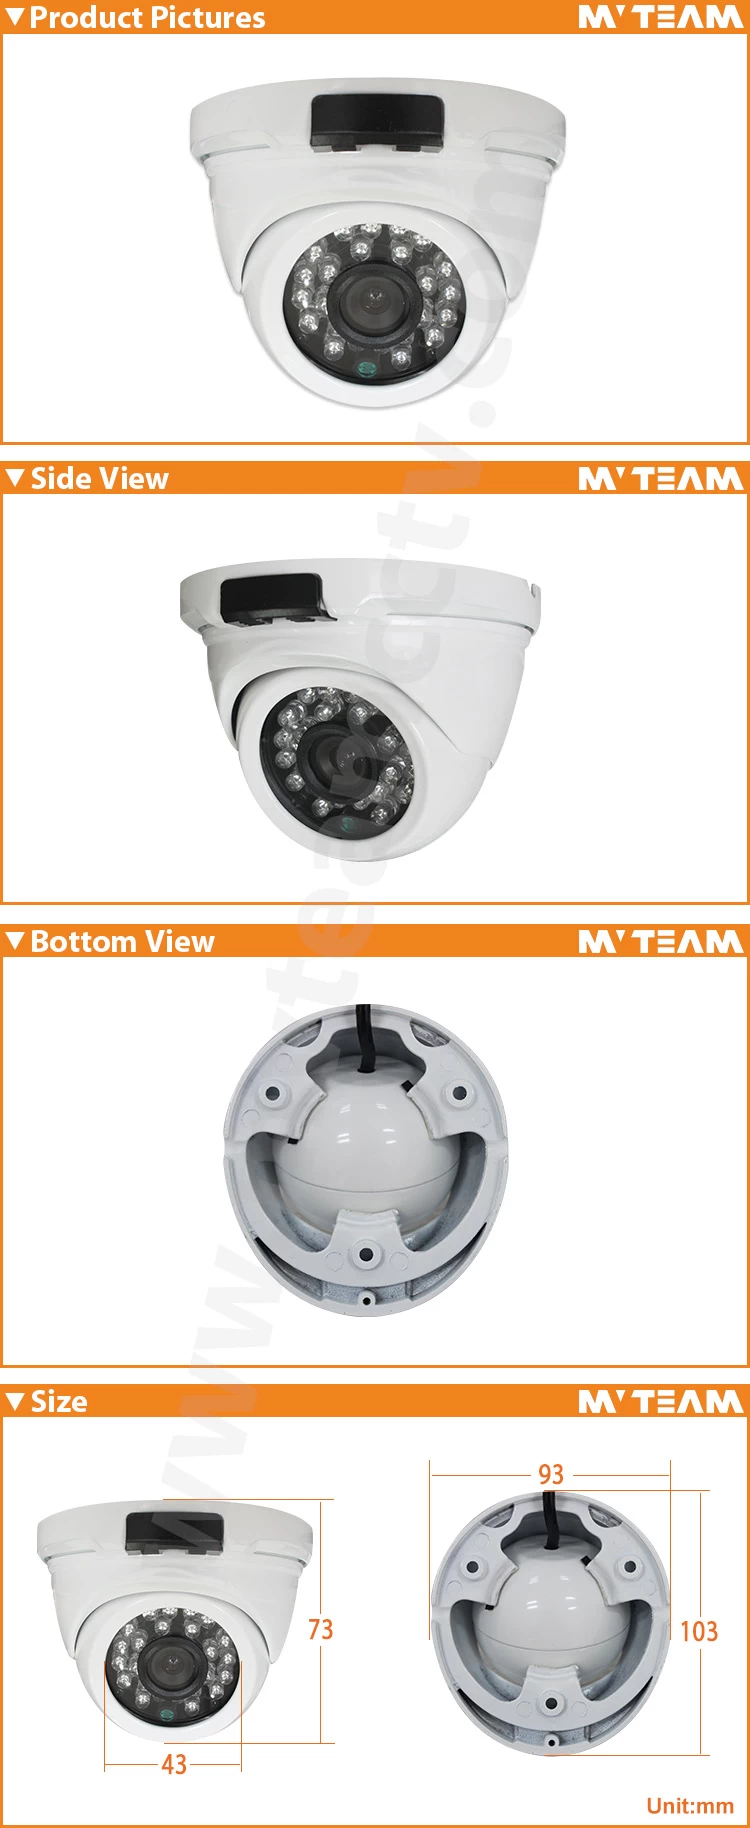 Vandalproof Metal Housing Dome 720P,1024P 1080P AHD Camera with fixed lens(MVT-AH34)